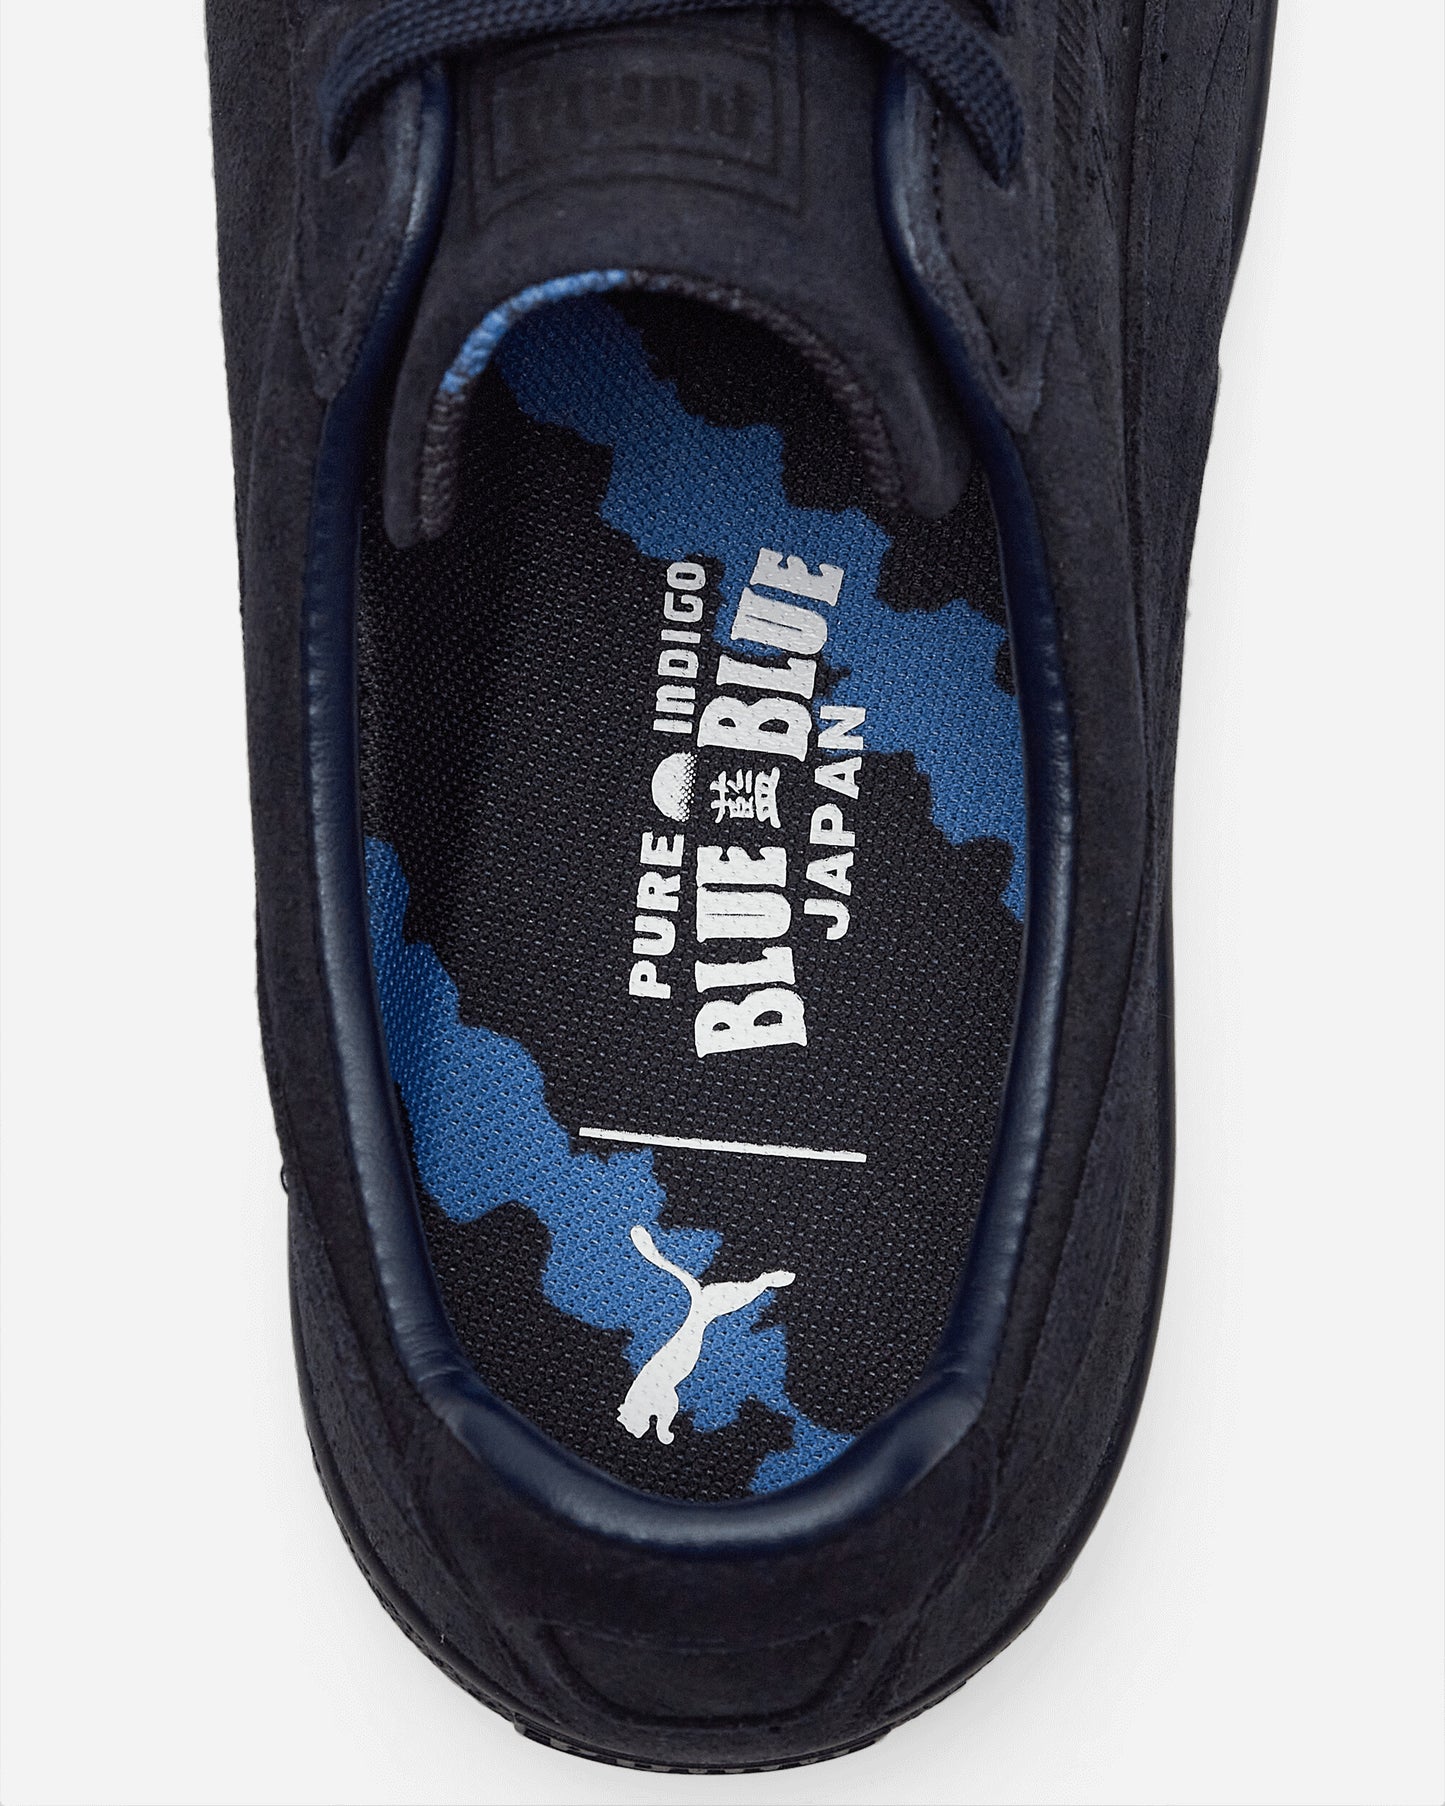 Puma Clyde Sorayama Mij Feather Gray-Puma Black Sneakers Low 395212-01